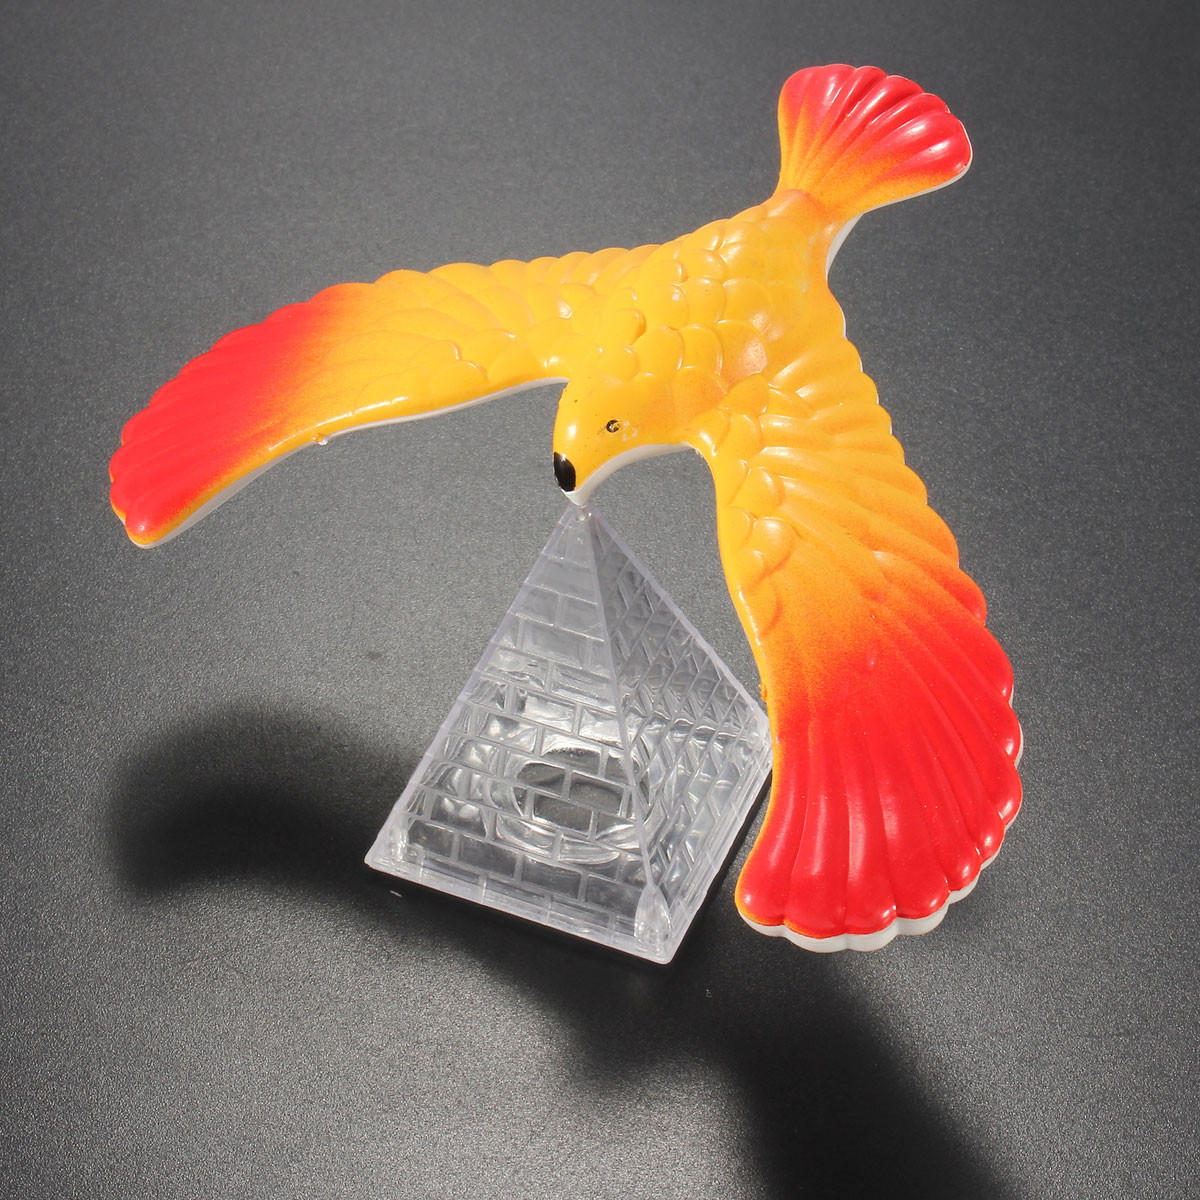 Magic Balancing Bird Science Desk Toy Novelty Fun Learning Gag Gift Decoration